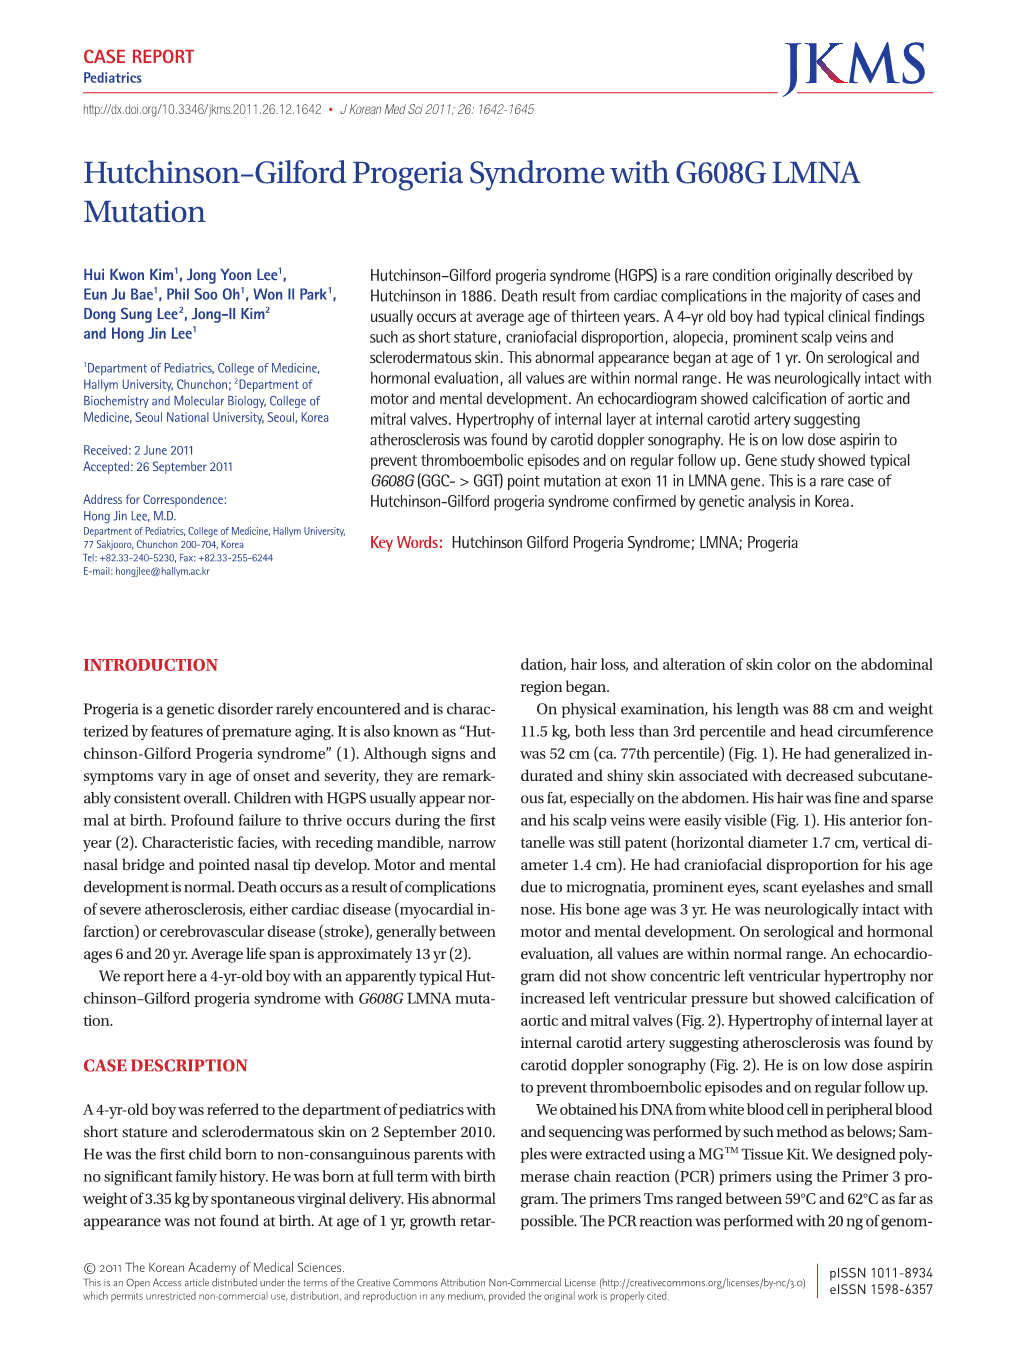 Hutchinson–Gilford Progeria Syndrome with G608G LMNA Mutation